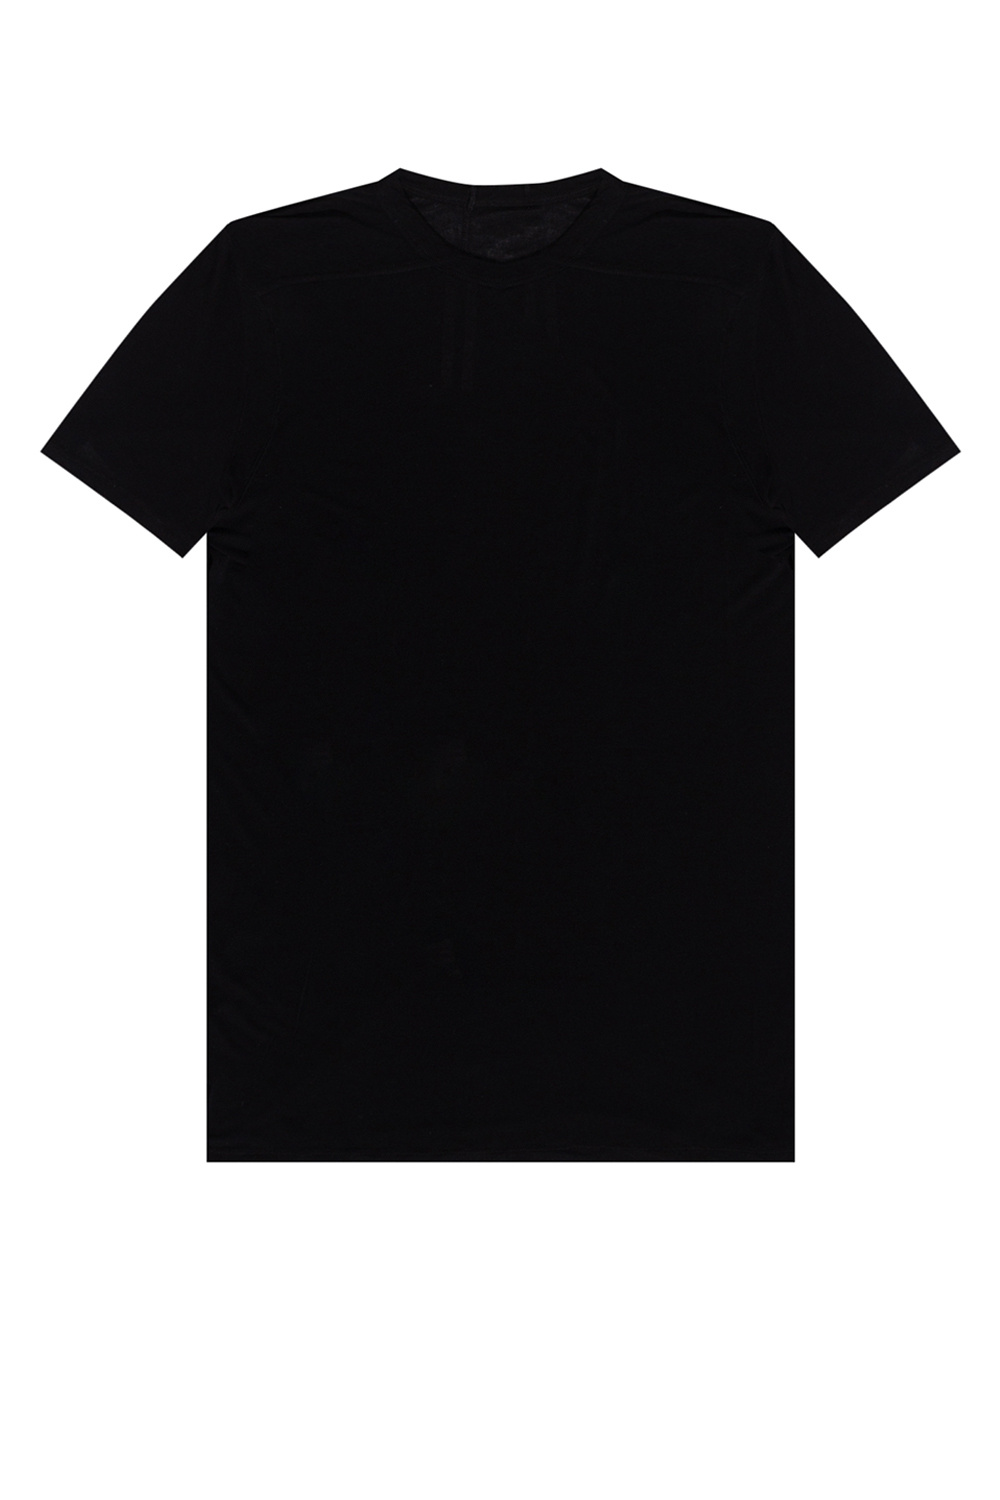 Rick Owens T-shirt with stitching